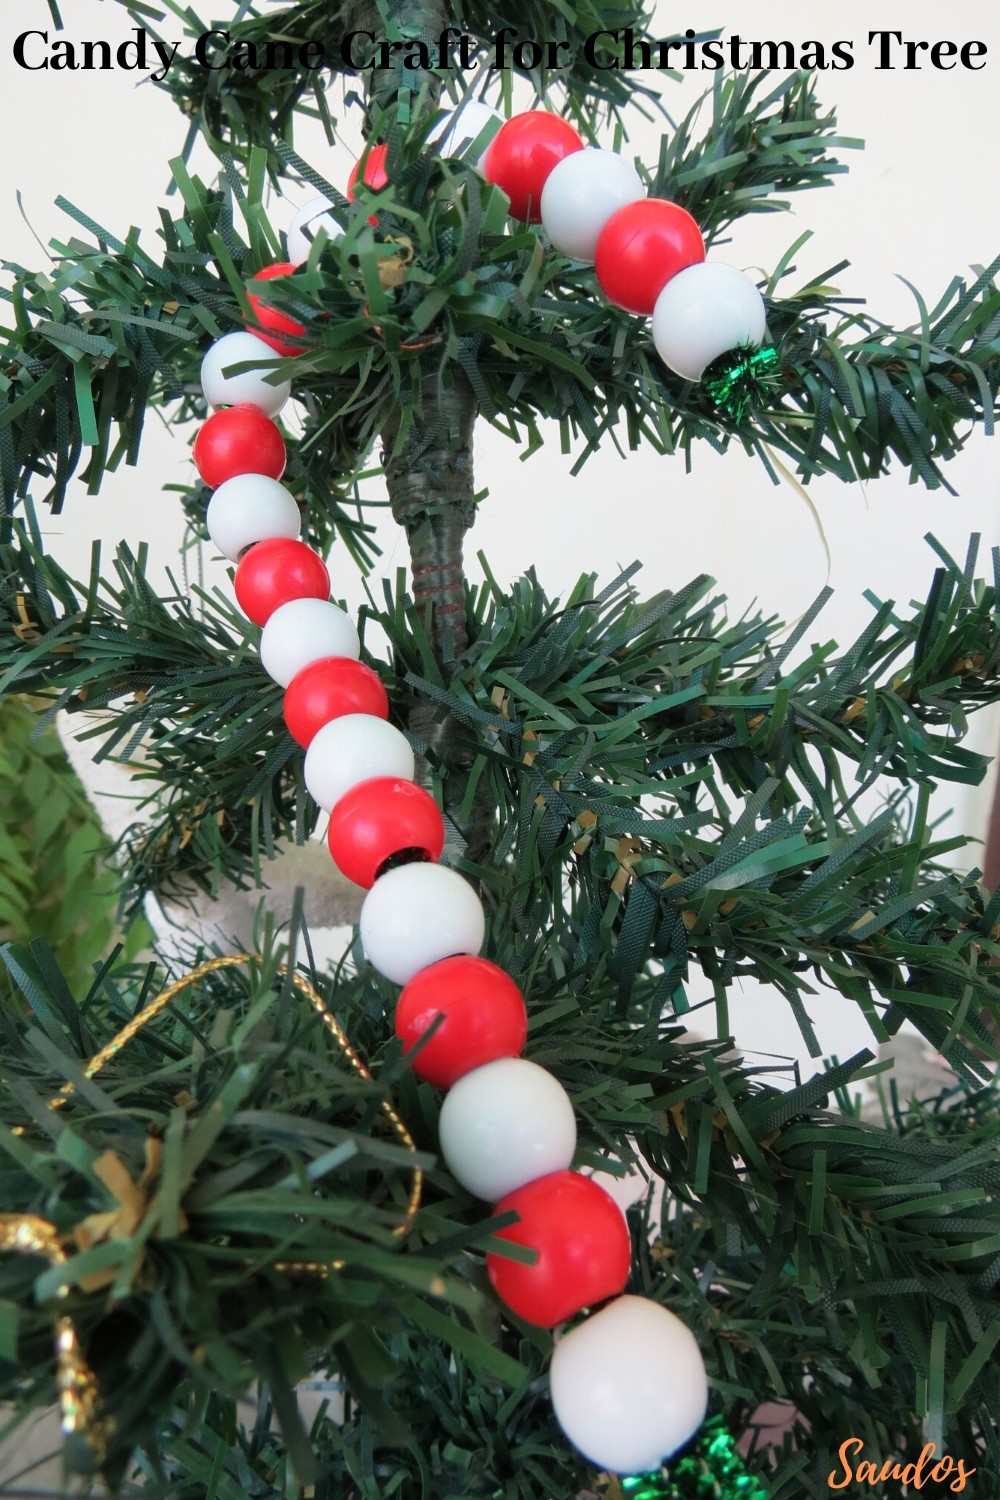 Christmas Car Ornament for Christmas Tree